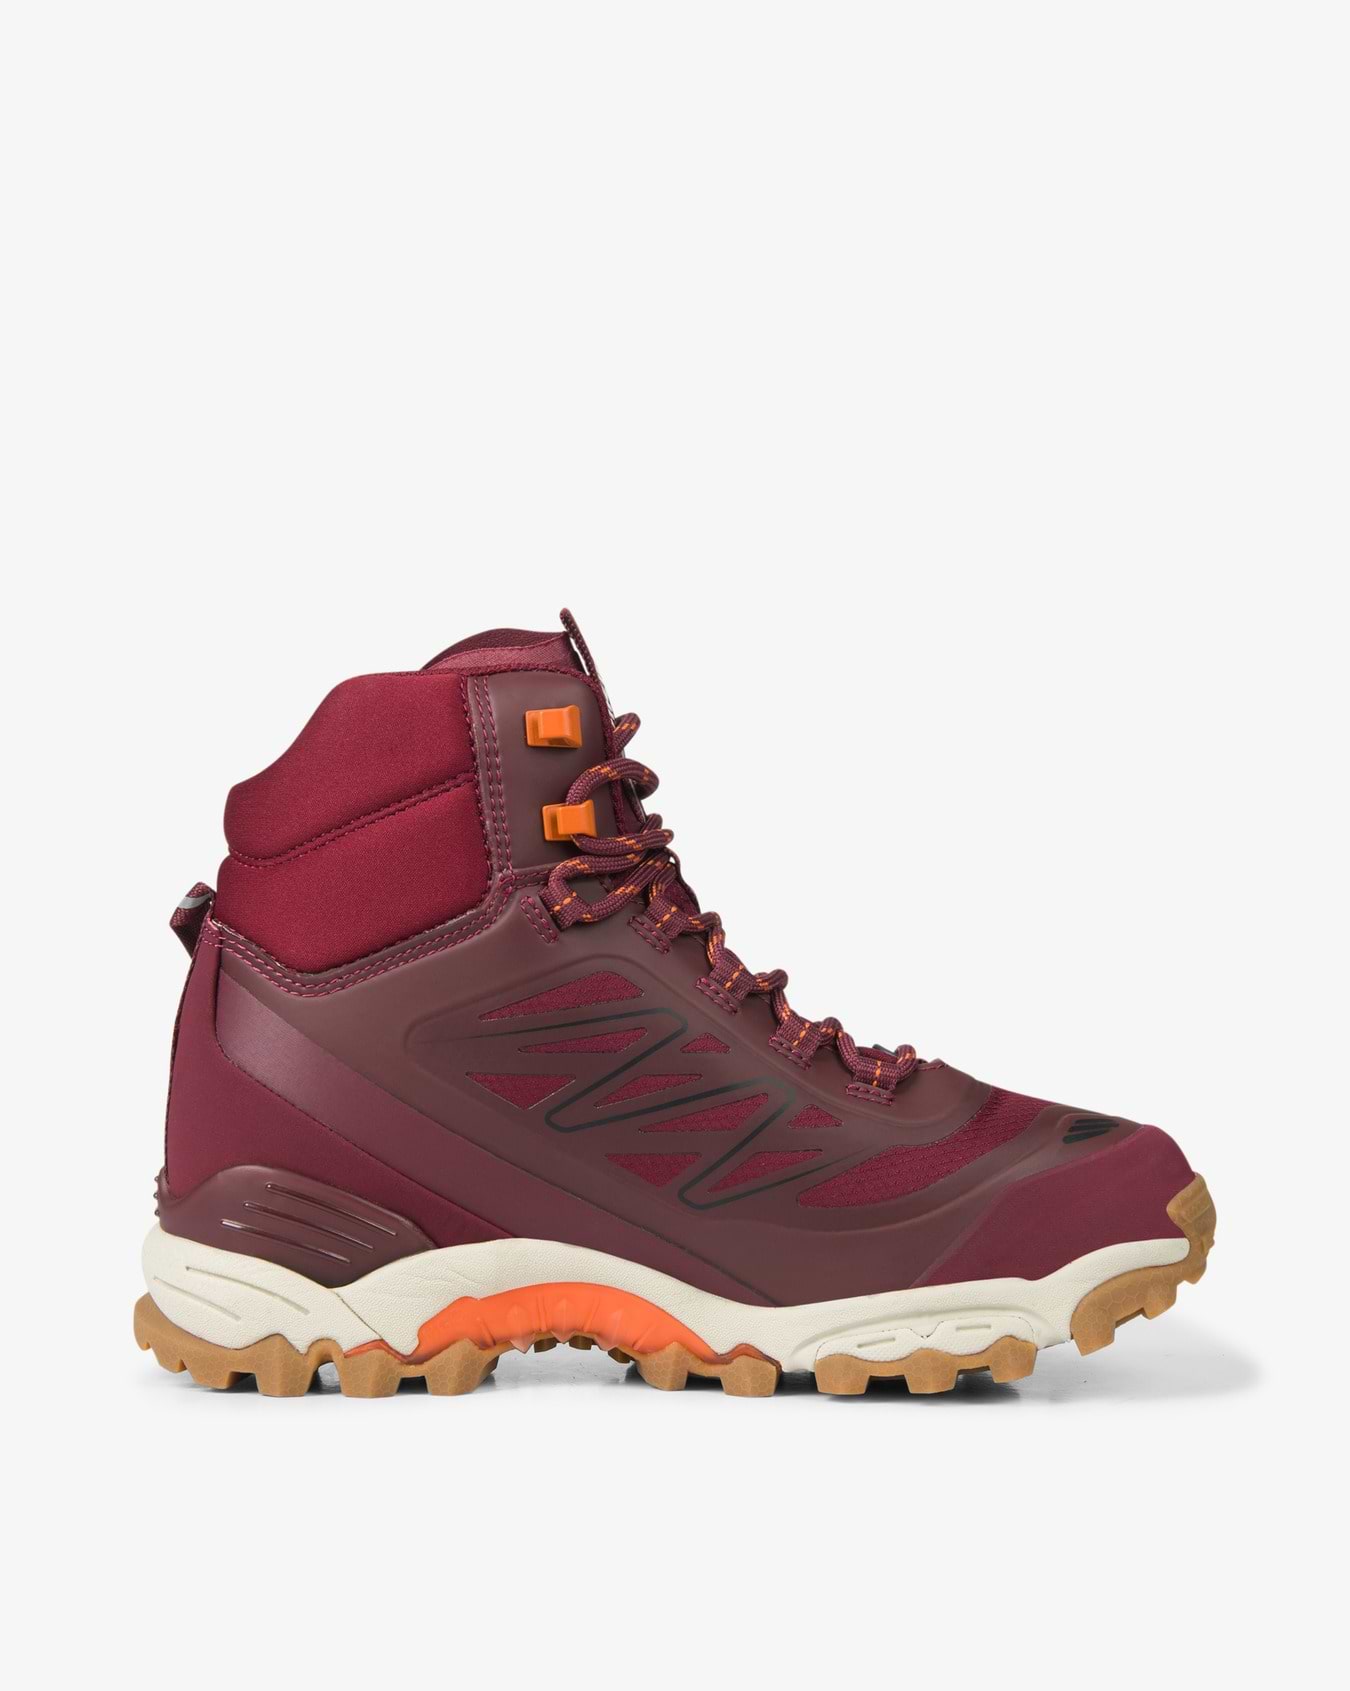 Anaconda 4x4 Mid GTX Red Hiking Boots